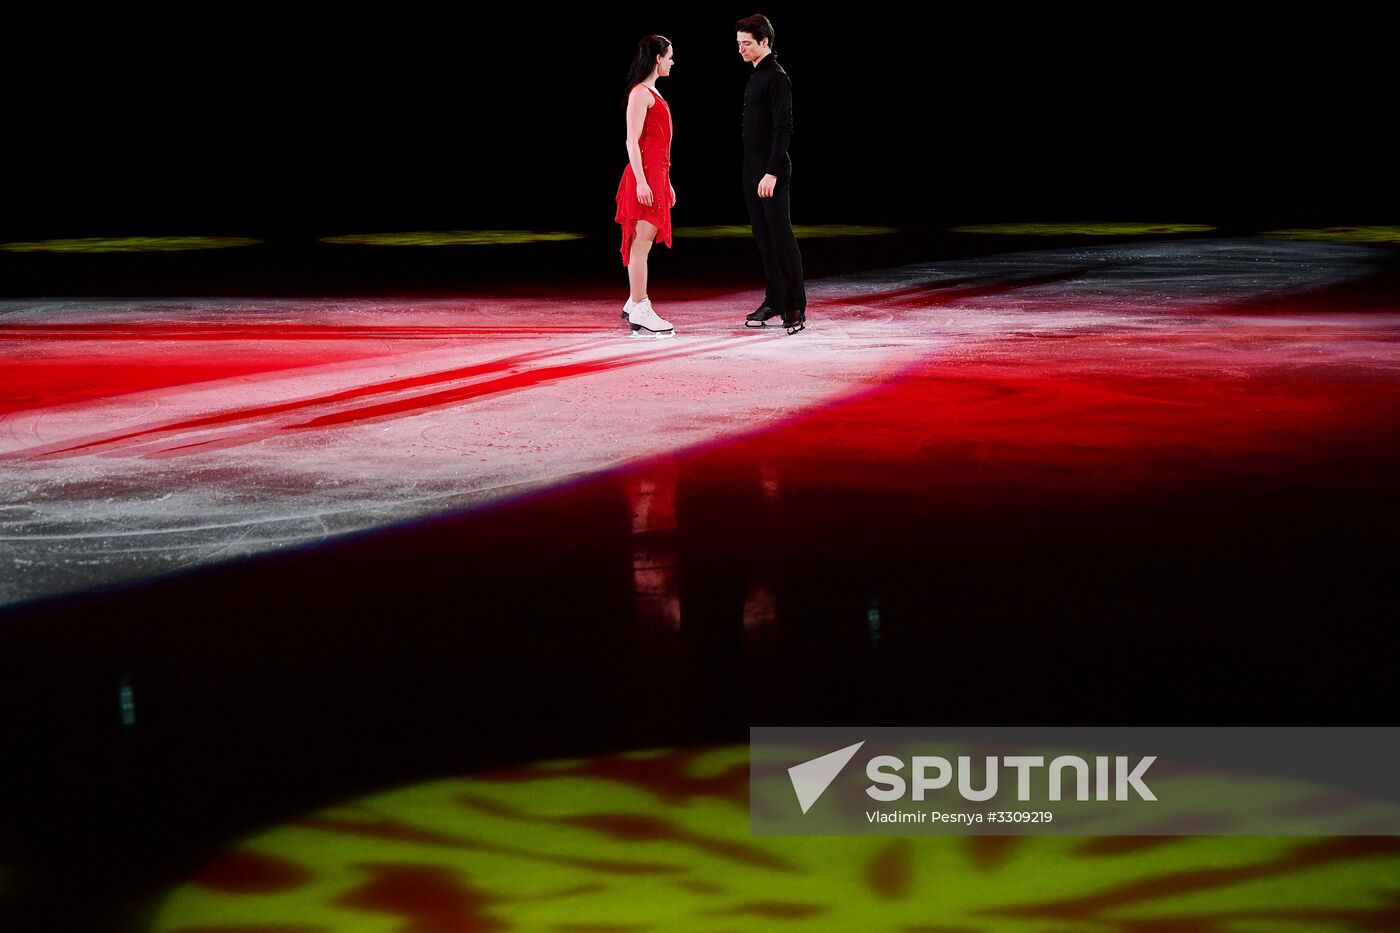 2018 Winter Olympics. Figure skating. Exhibition gala